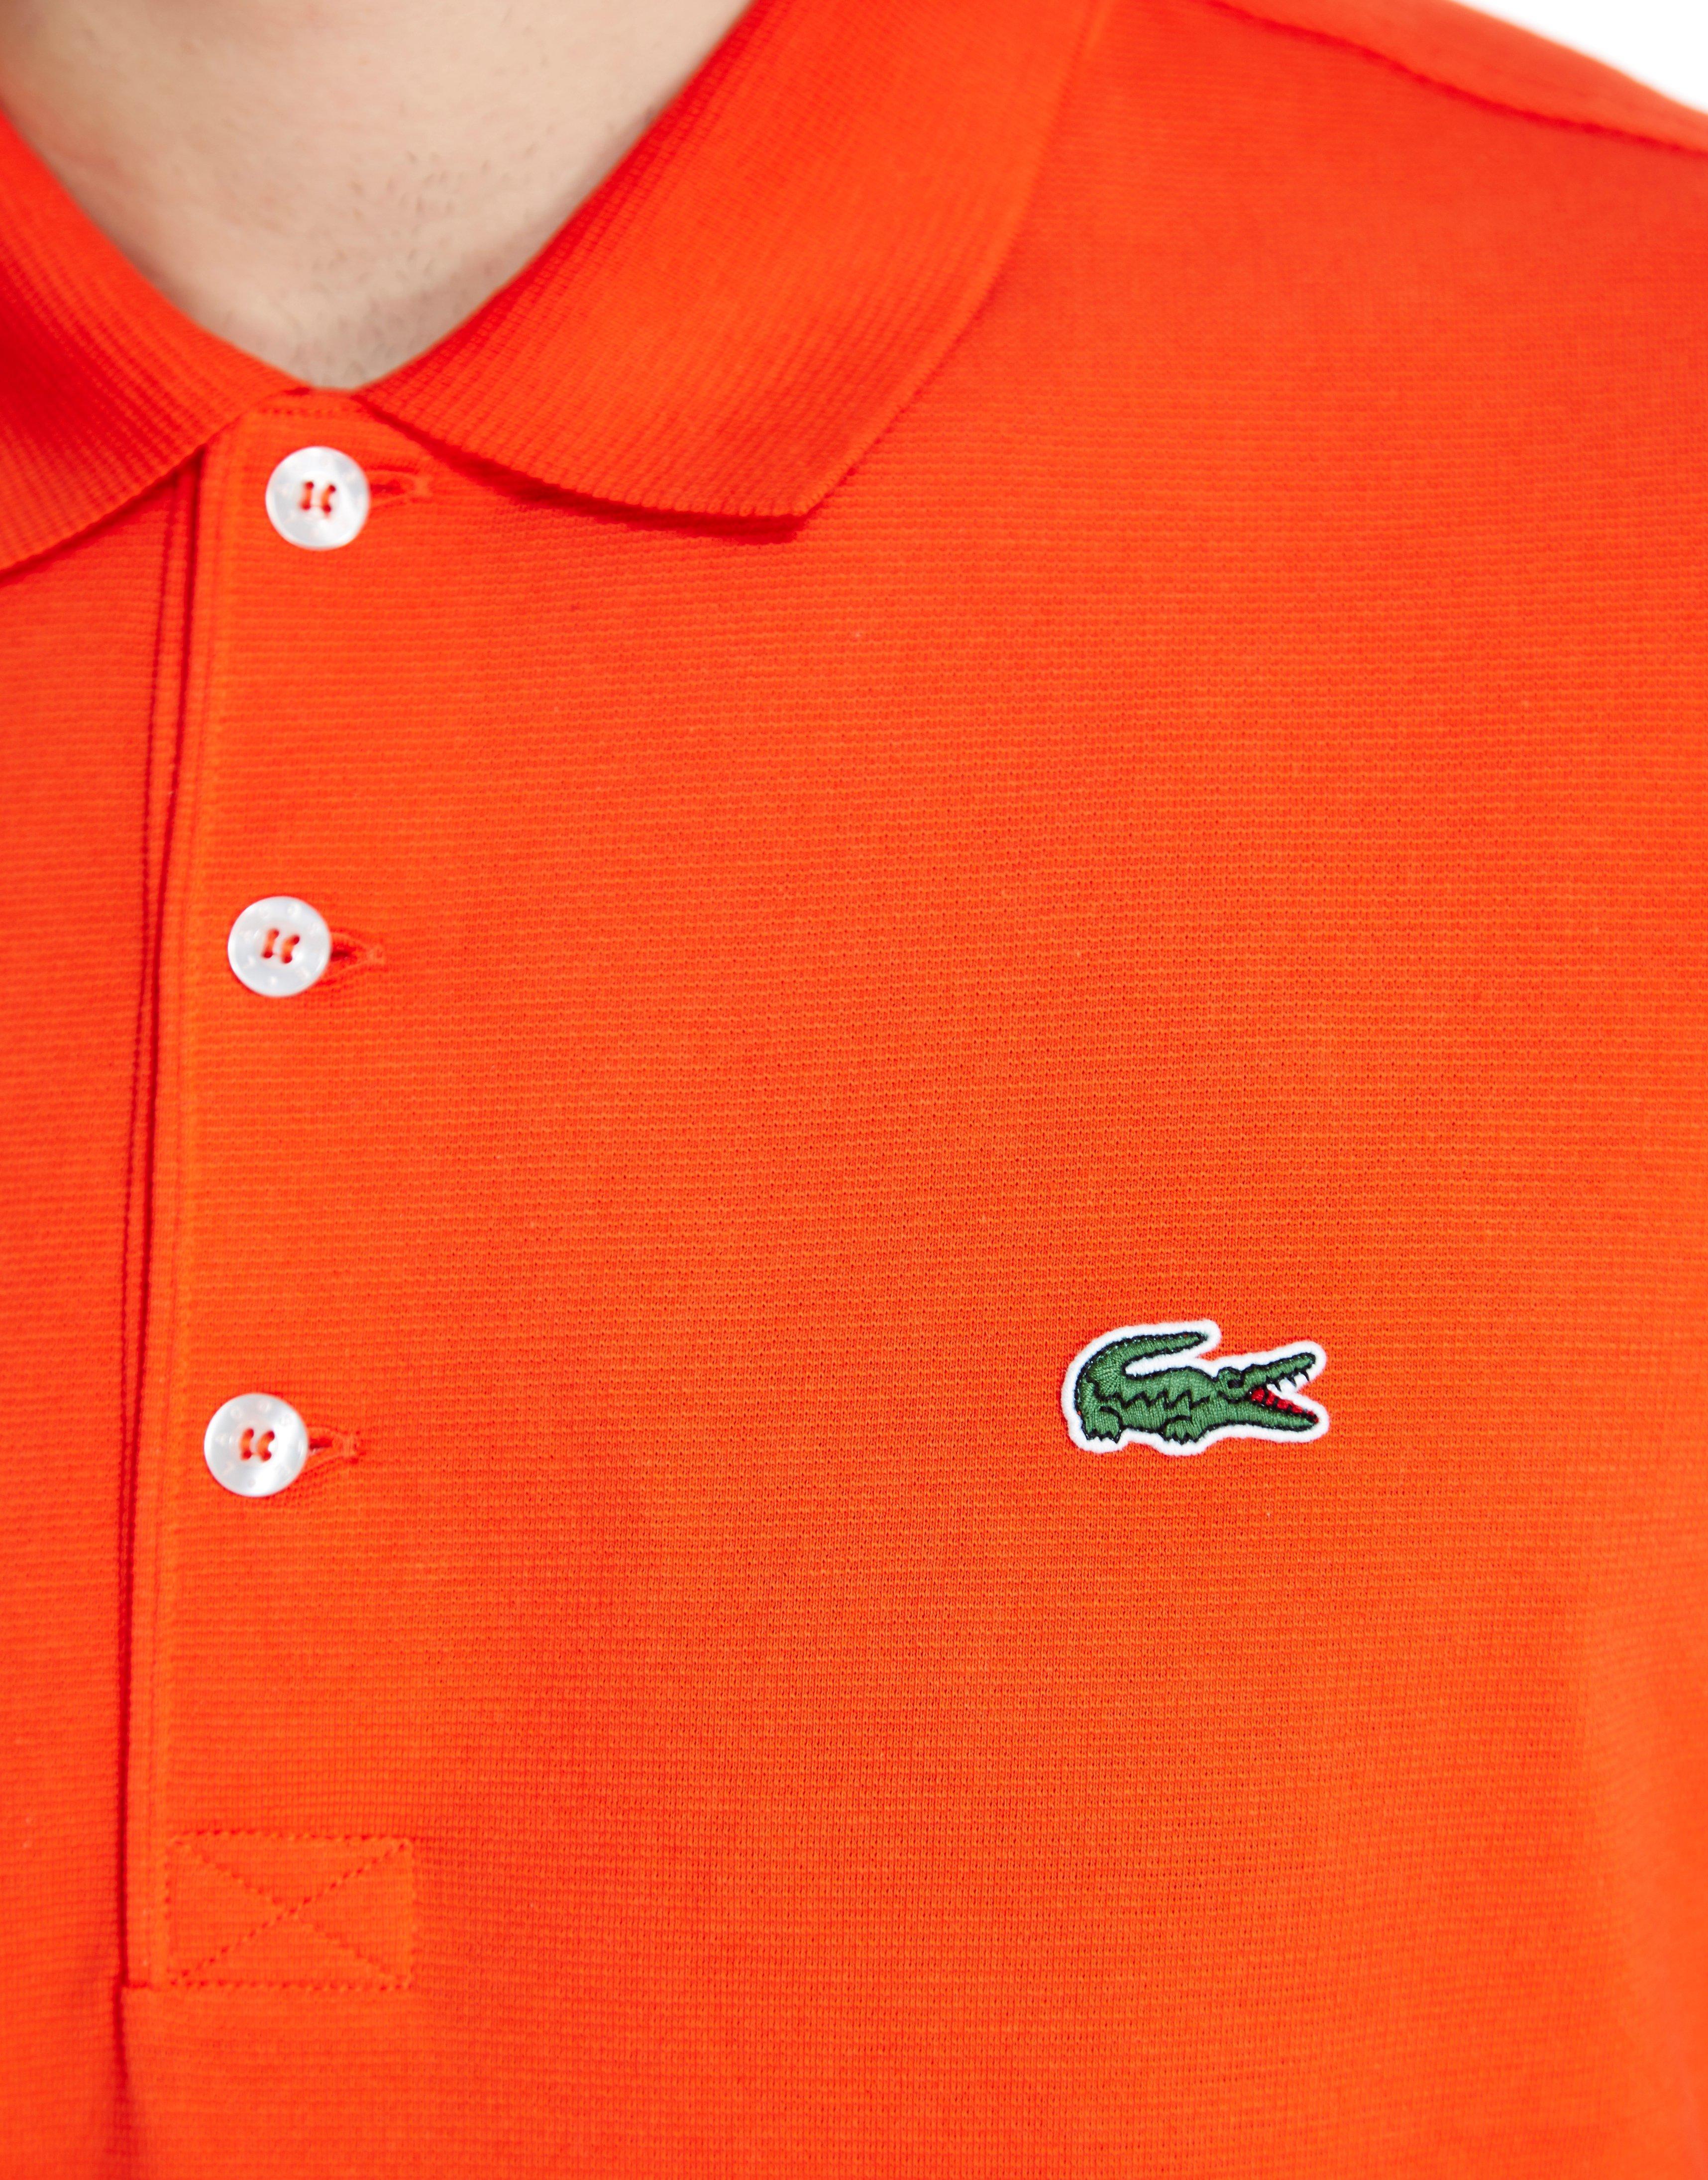 shirt with gator logo